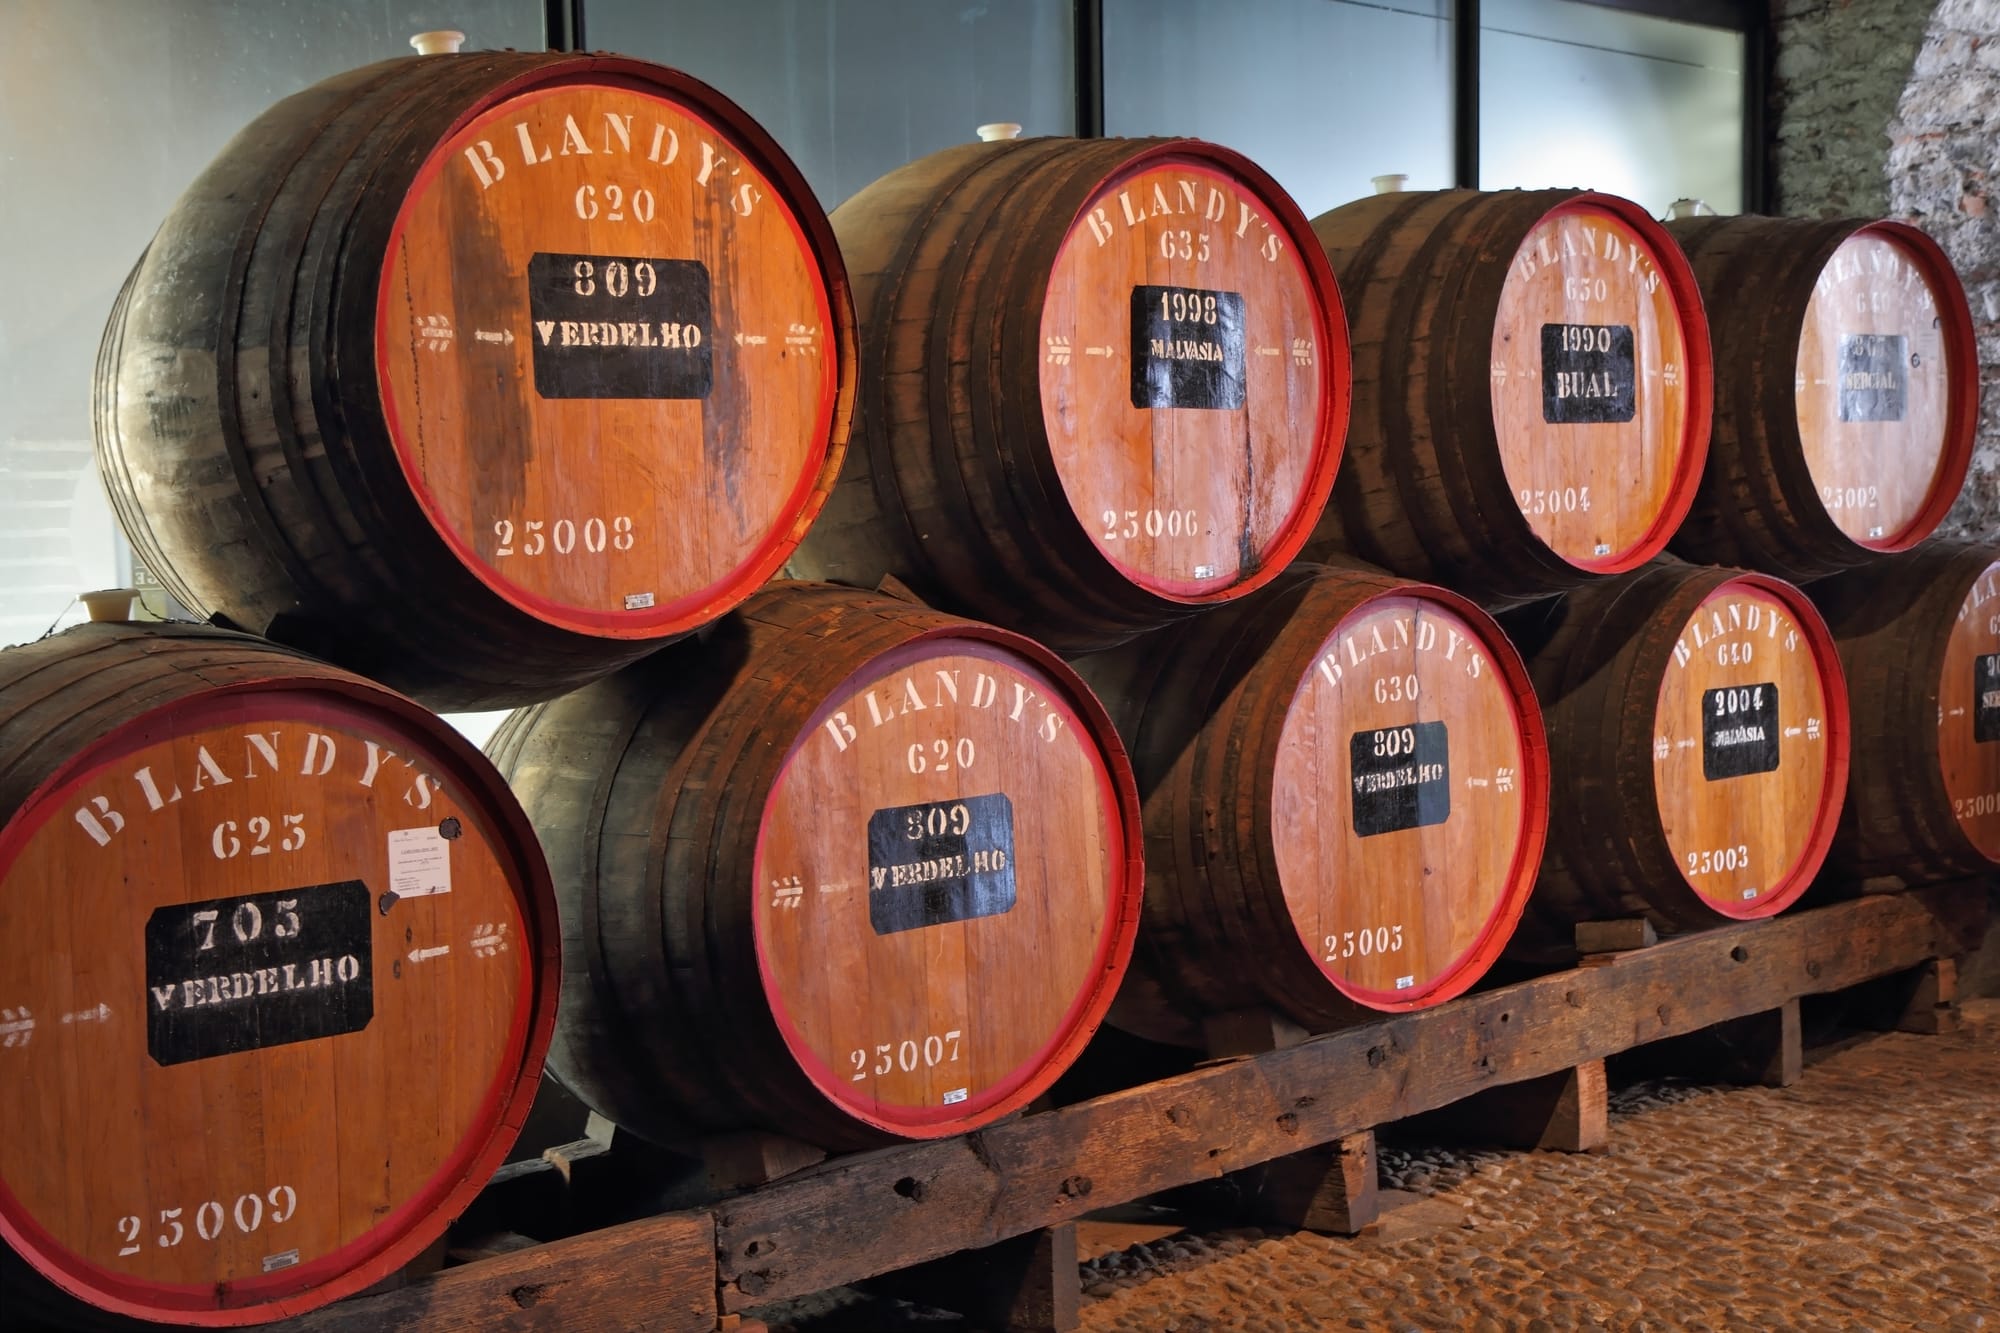 Classic huge oak barrels of wine Madera